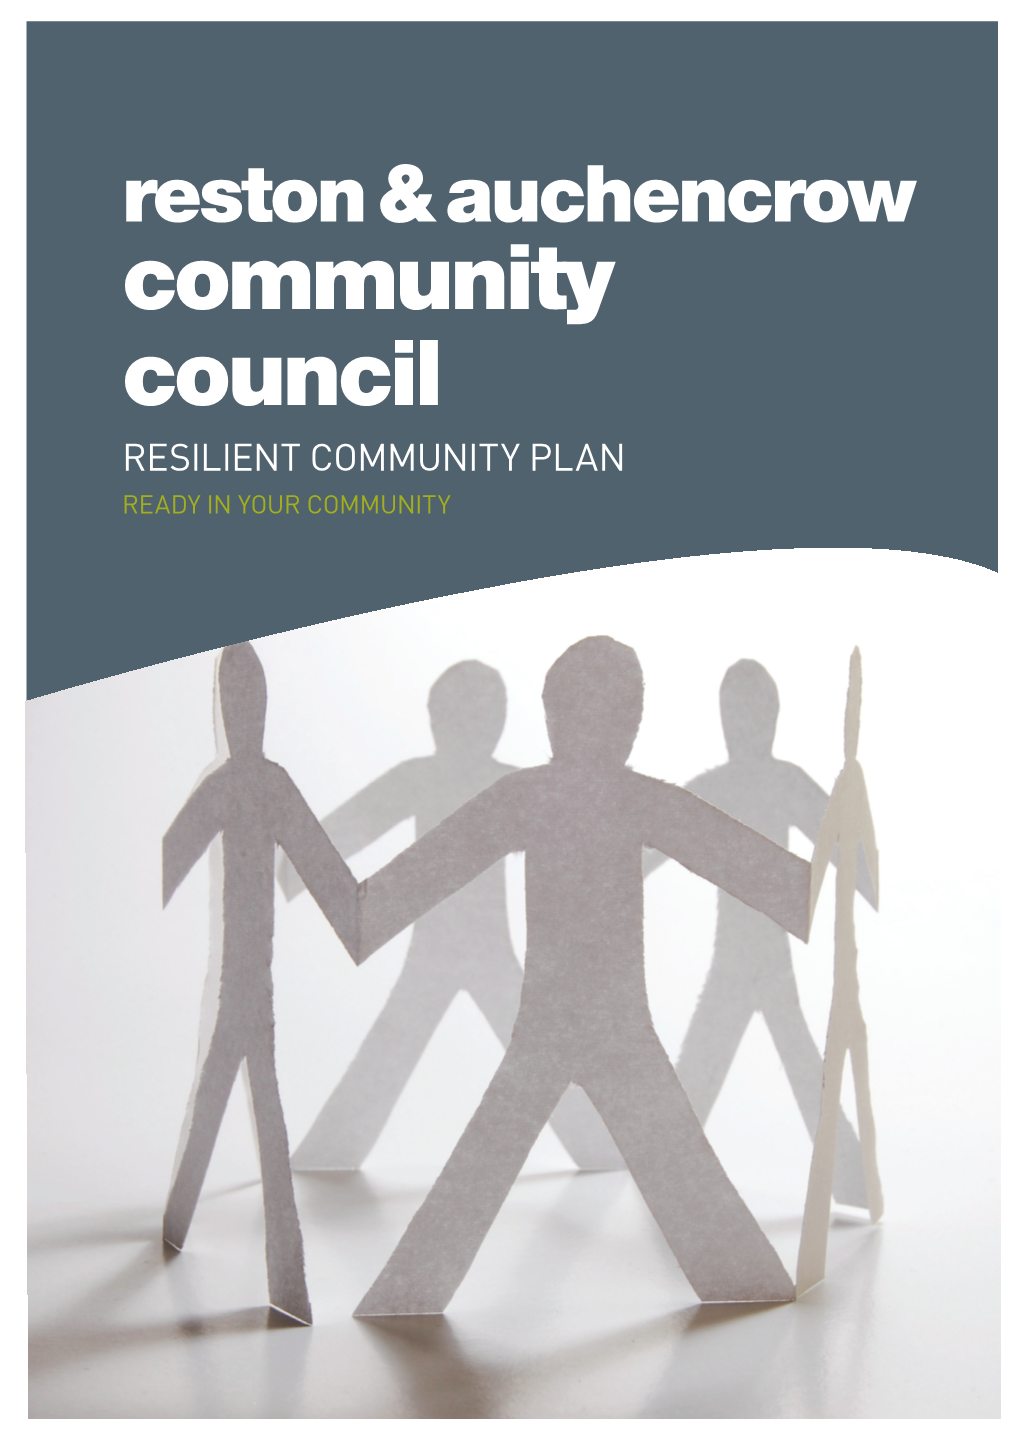 Community Council Resilient Community Plan Ready in Your Community Contents Reston & Auchencrow Community Council